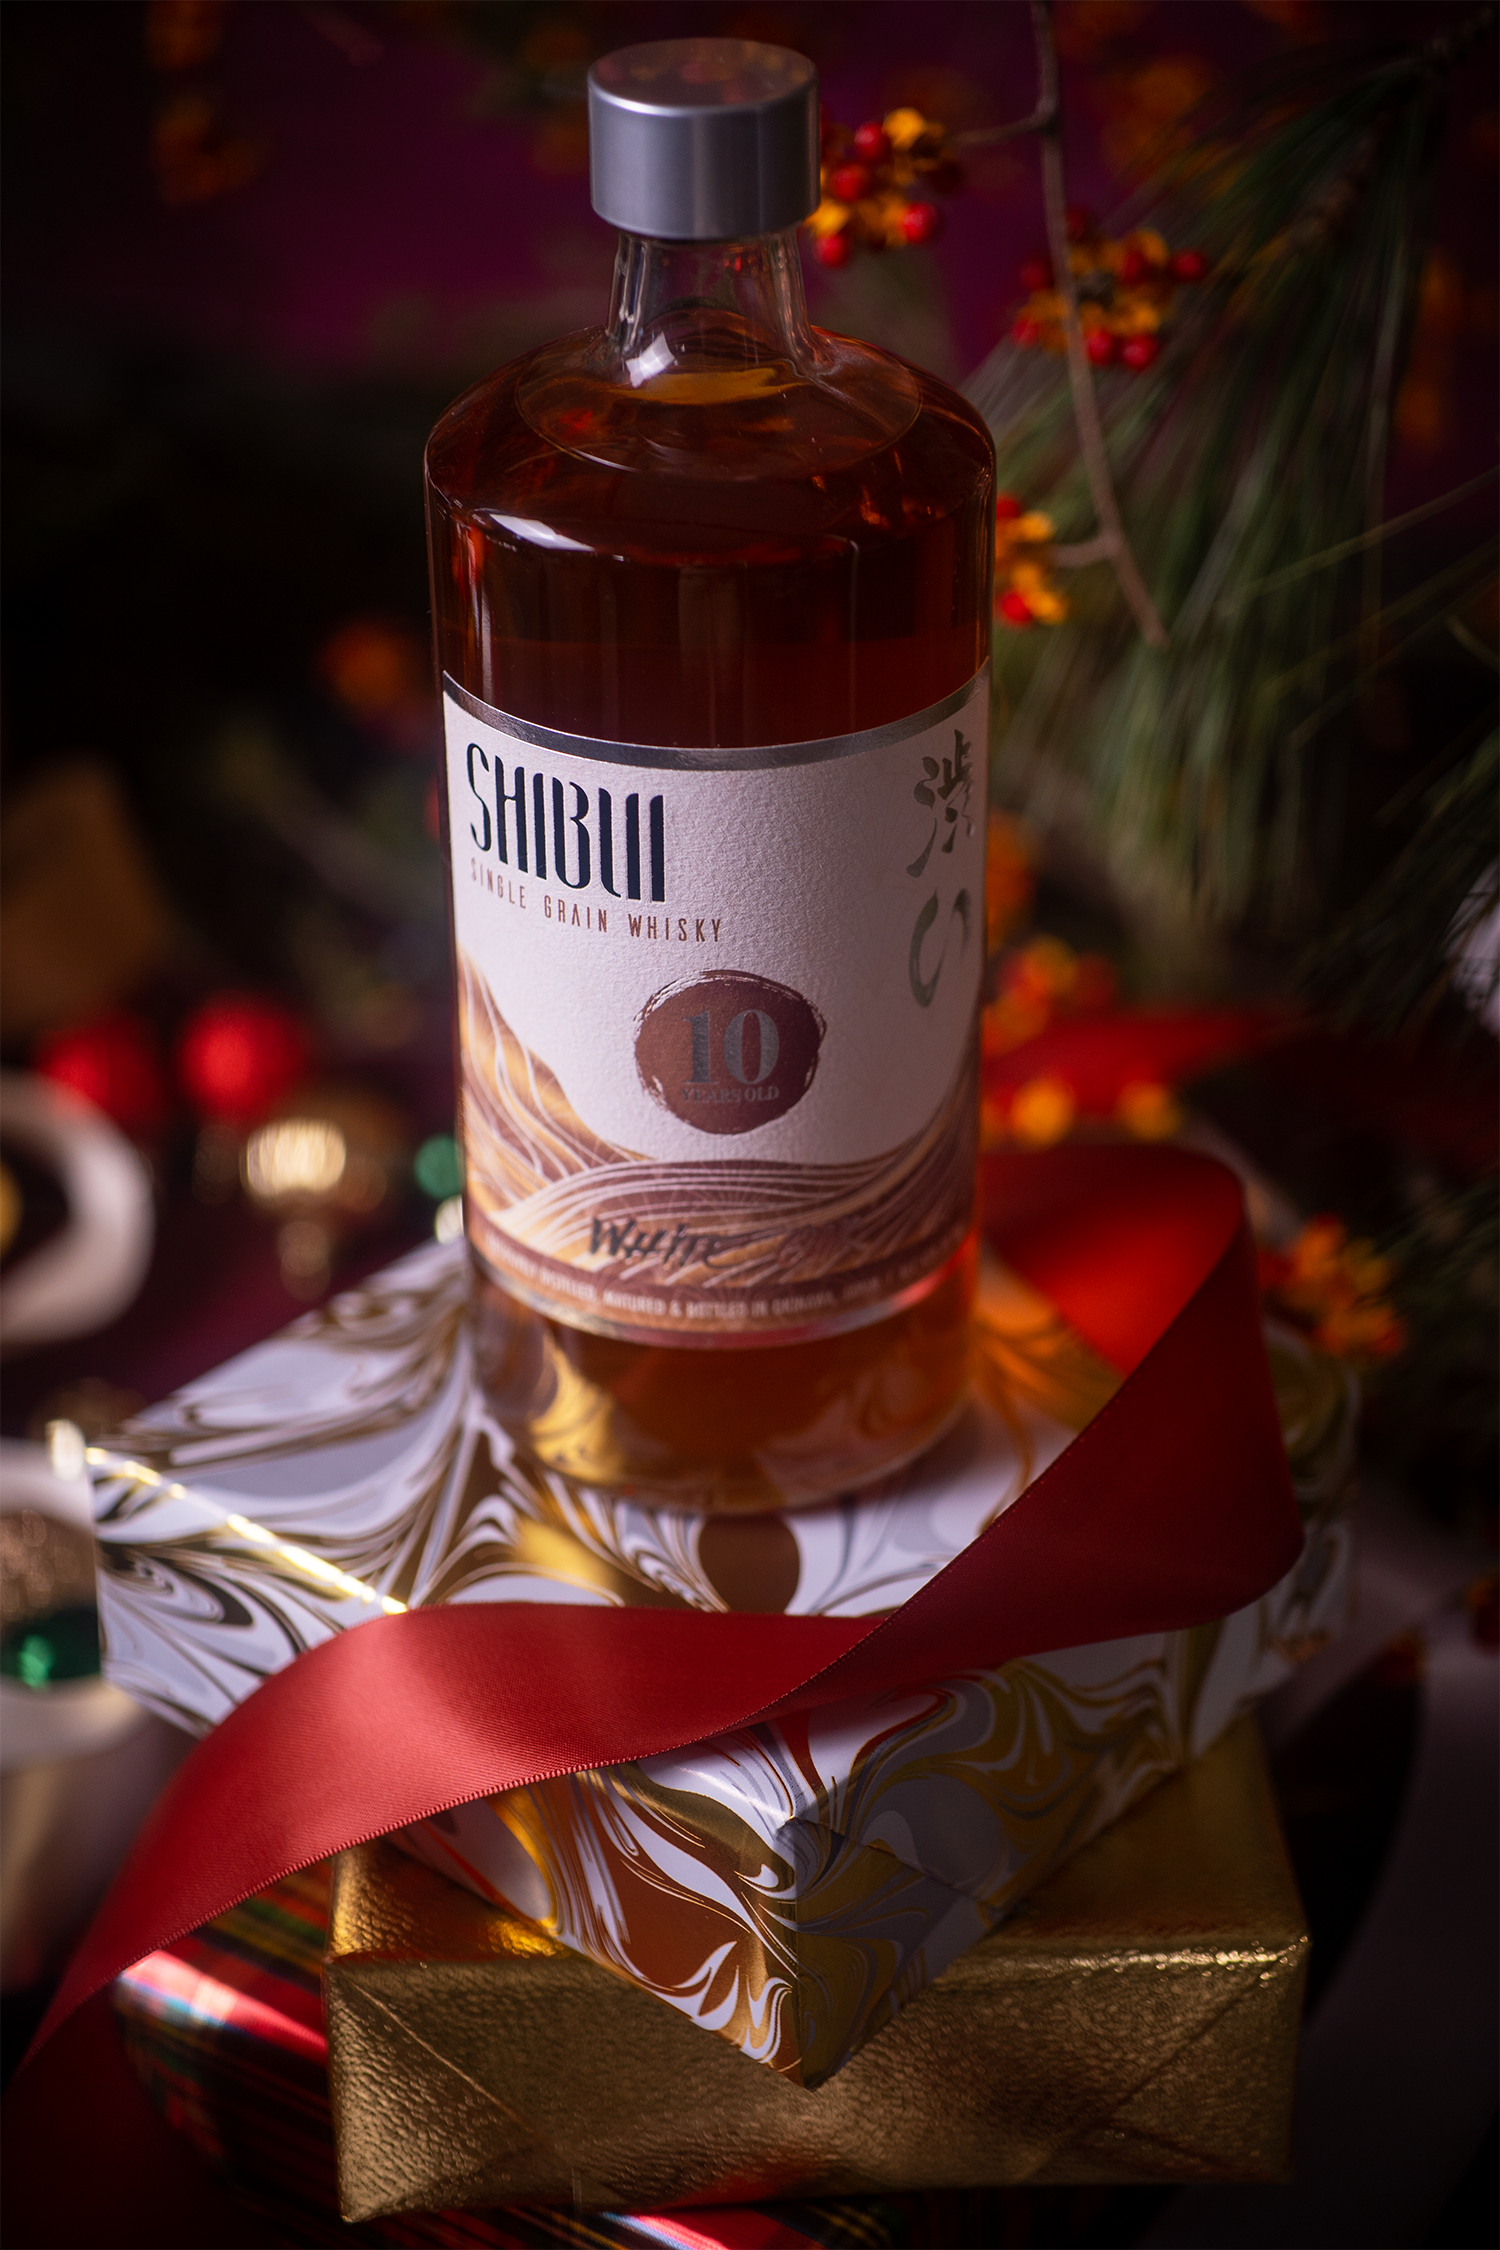 Shibui holiday 2022 whisky 10 white oak on gifts 2.png